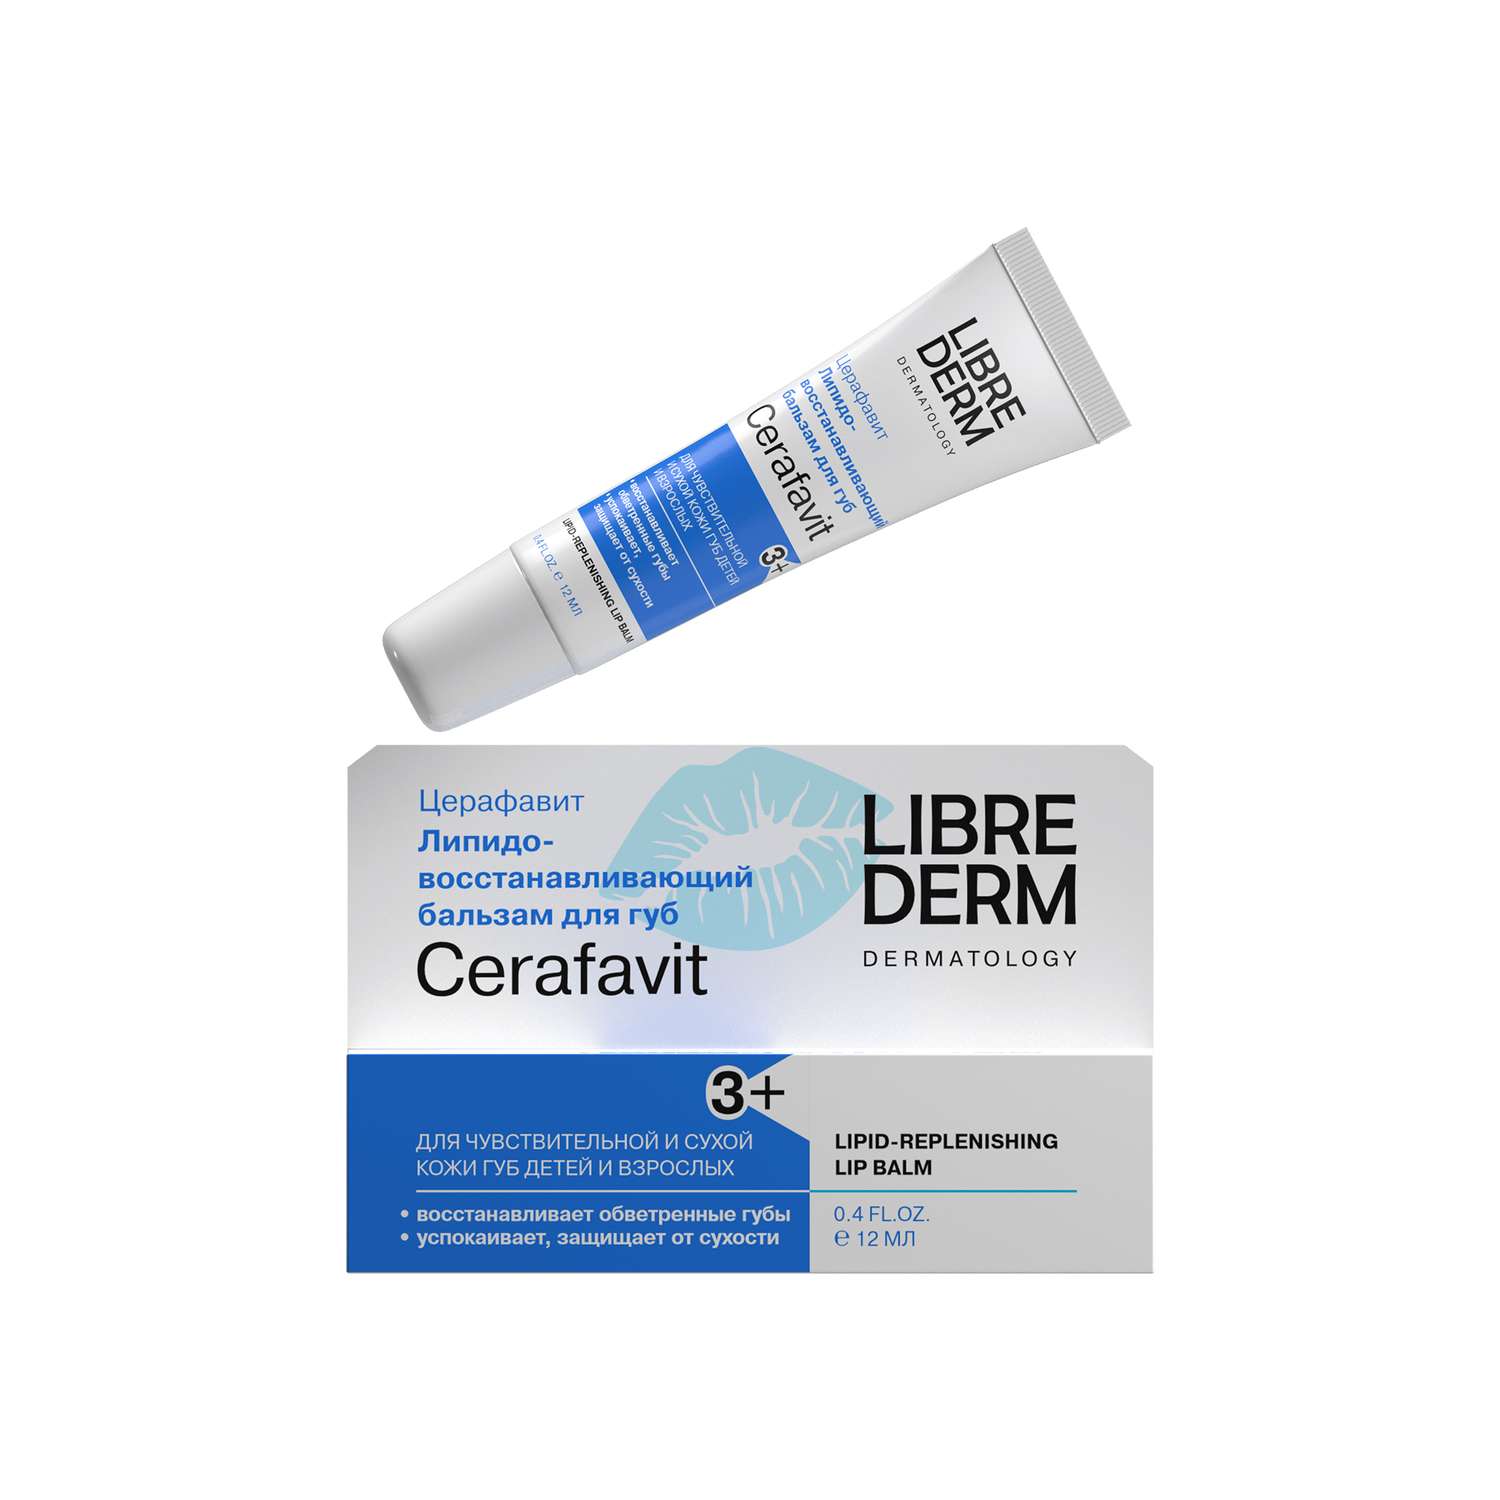 Бальзам для губ Librederm CERAFAVIT липидовосстанавливающий с церамидами и витамином F 12 мл - фото 1